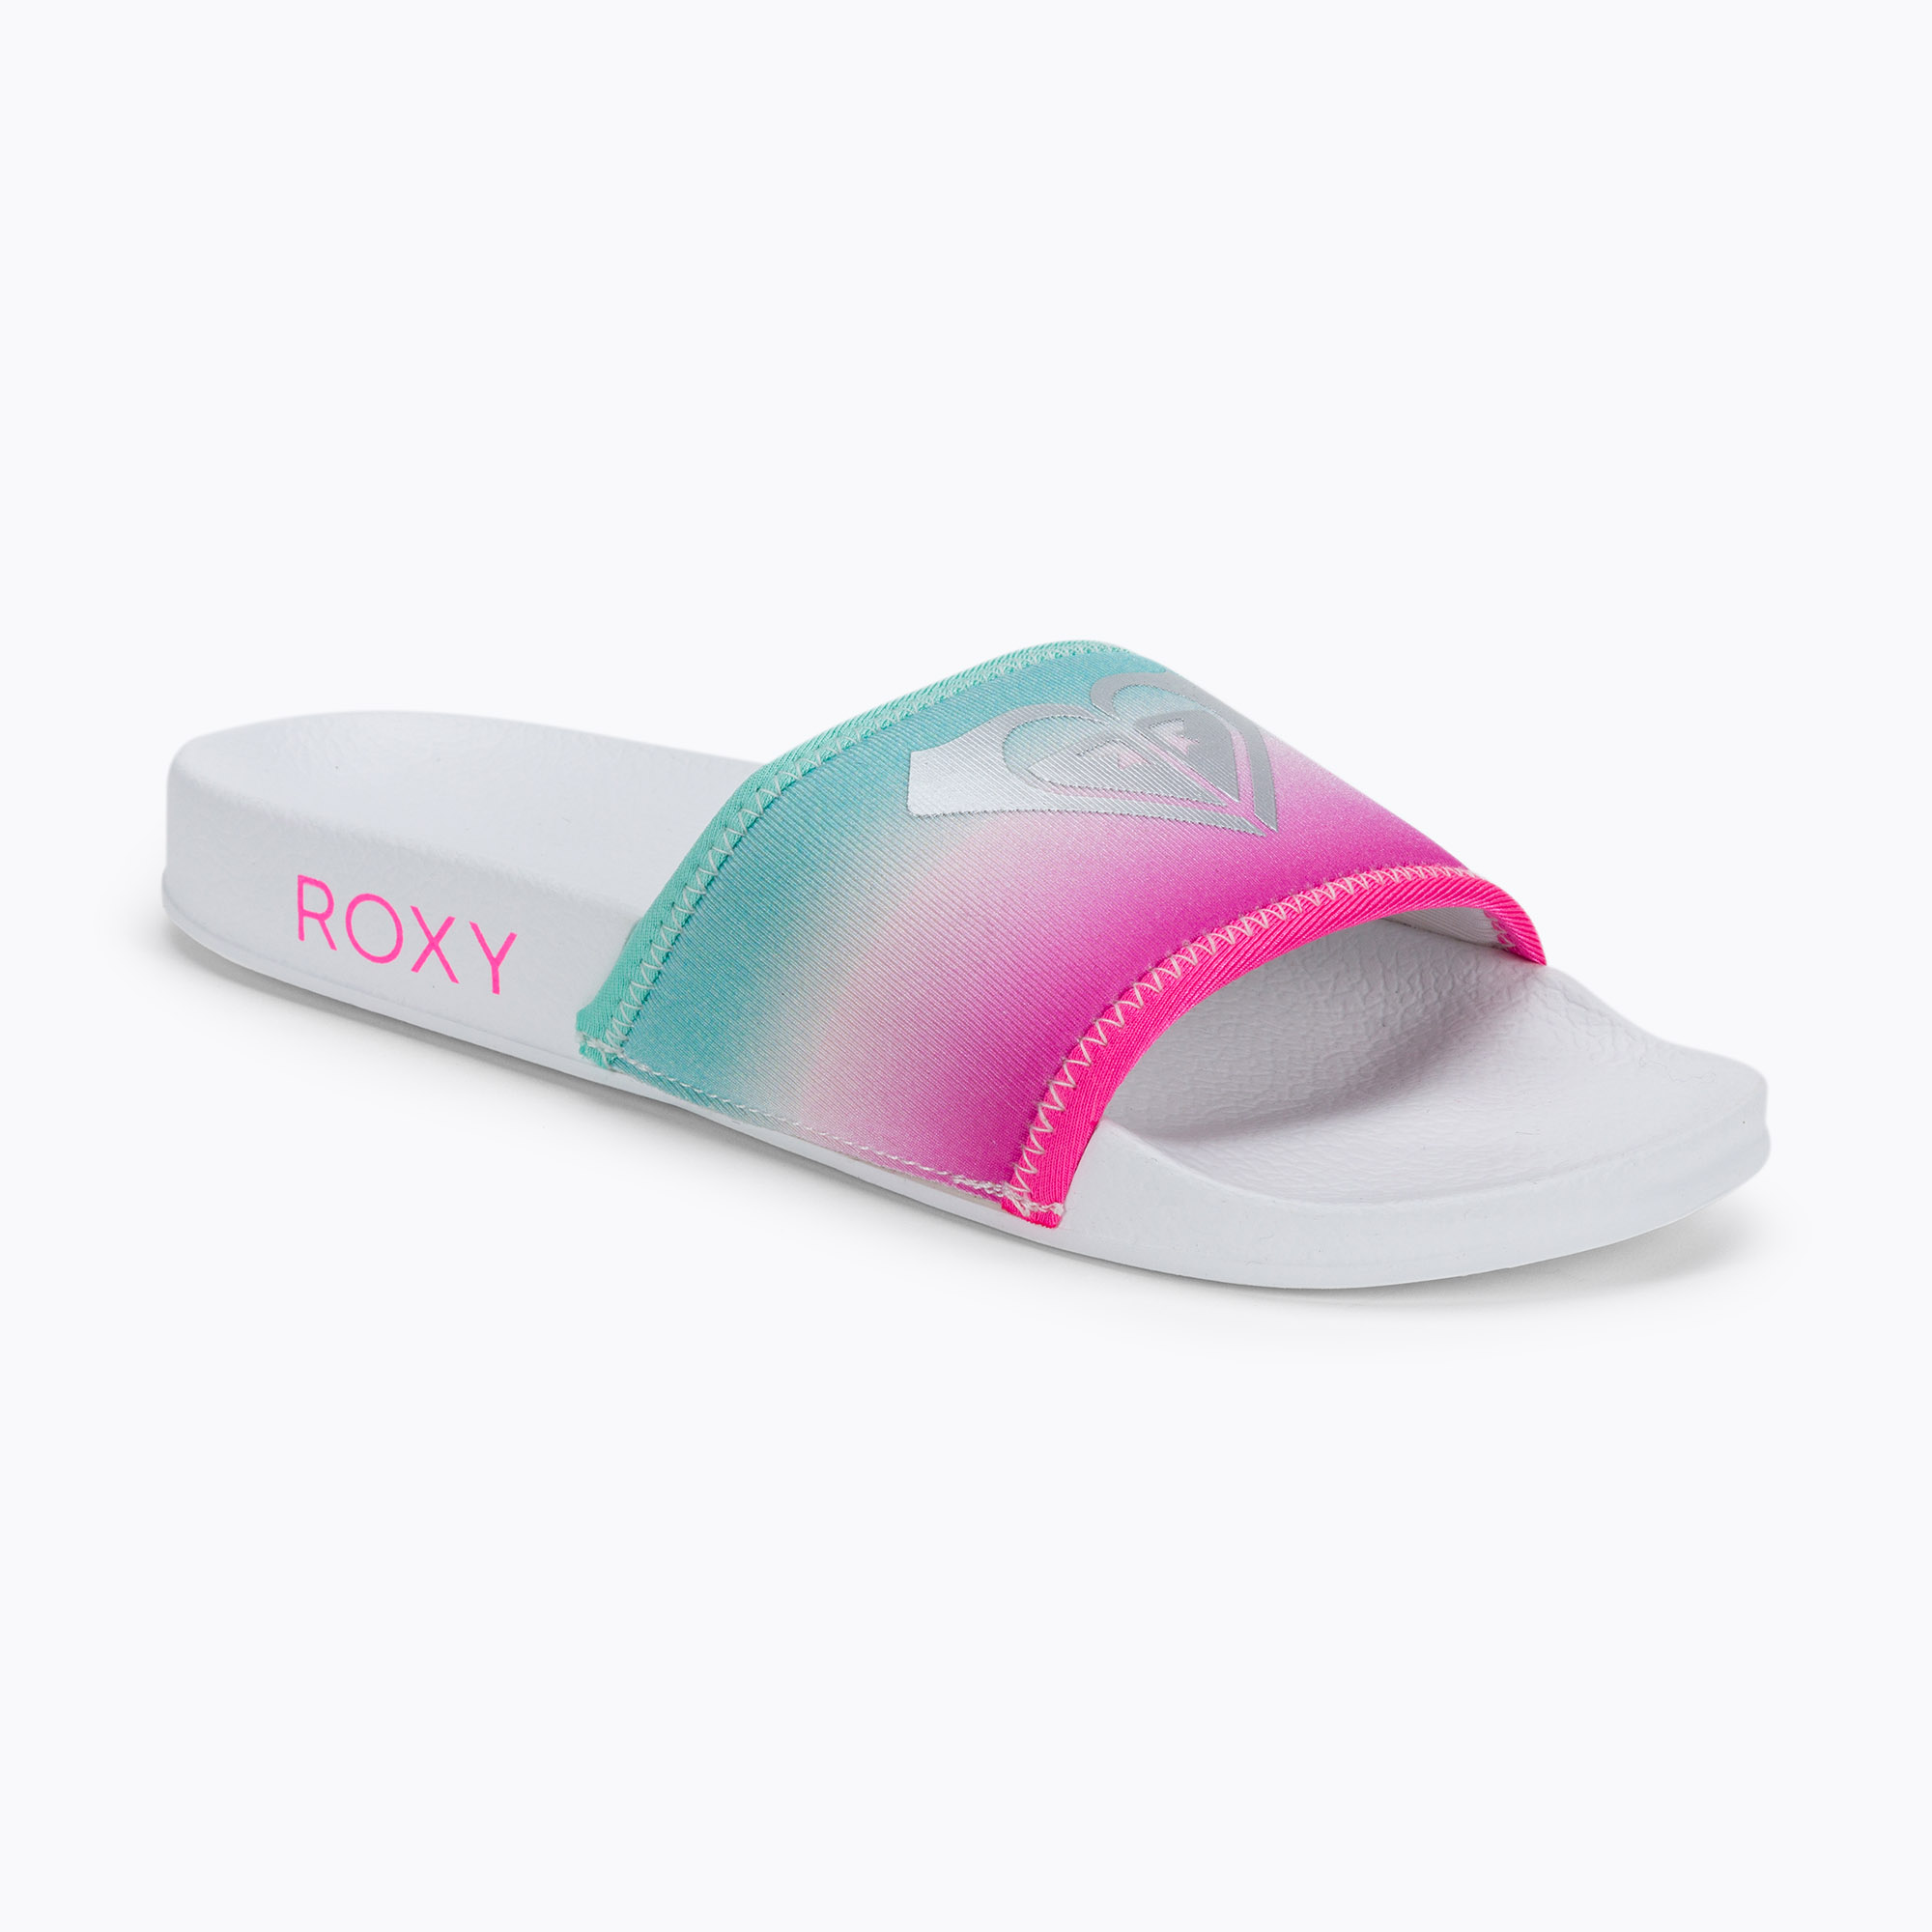 Detské žabky ROXY Slippy Neo G 2021 white/crazy pink/turquoise